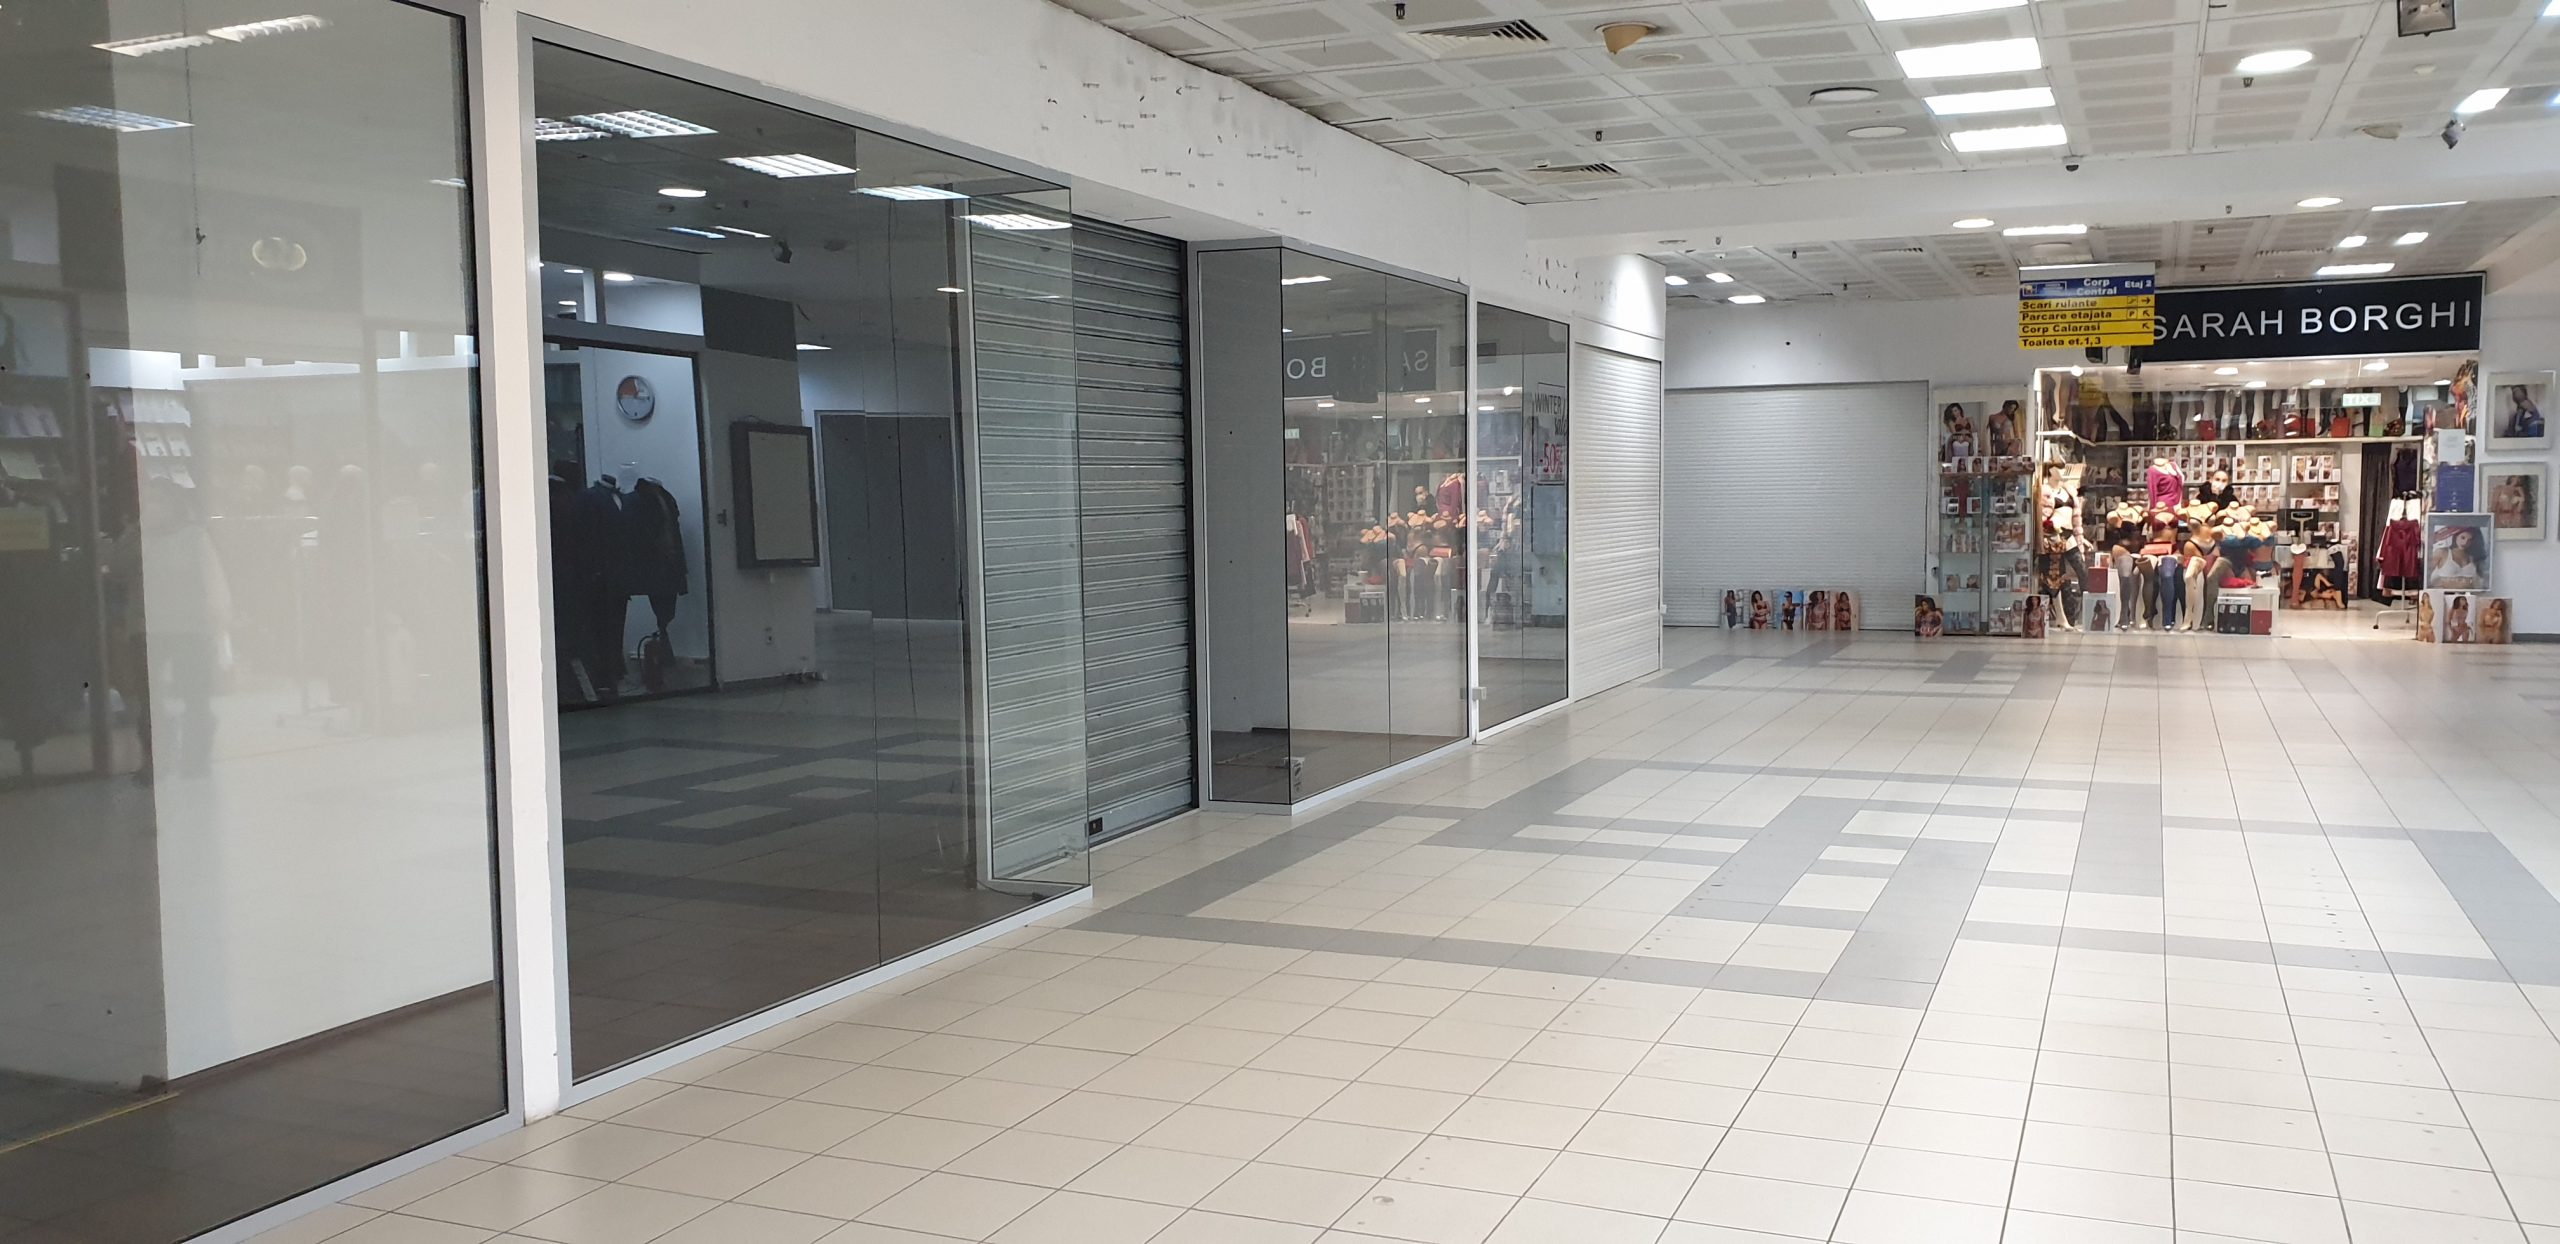 The Unirea Shopping Center runs out of tenants